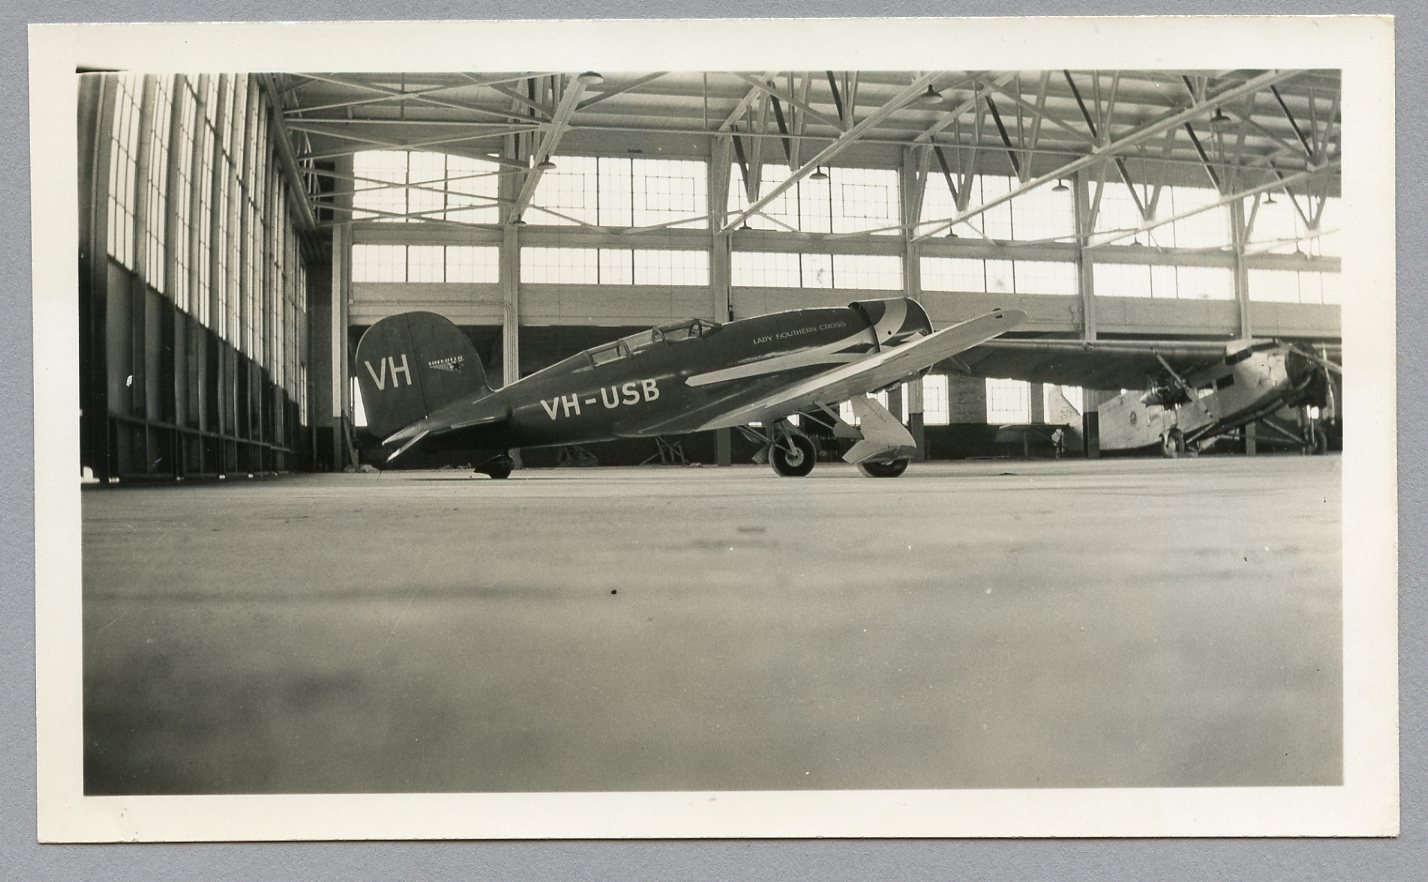 Photograph of the "Lady Southern Cross" aircraft in hangar at Oakland Airport, California, USA, 1934